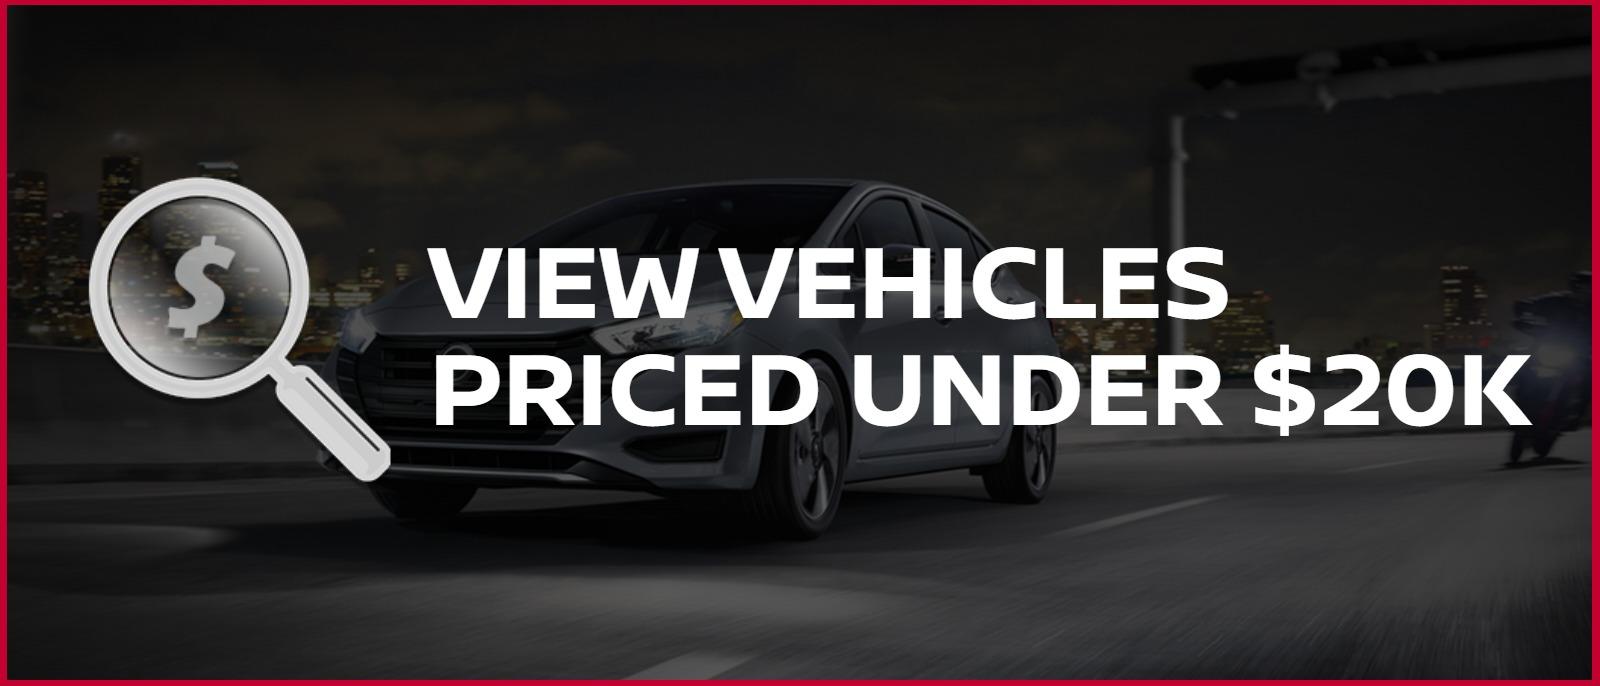 View vehicles priced under $20K